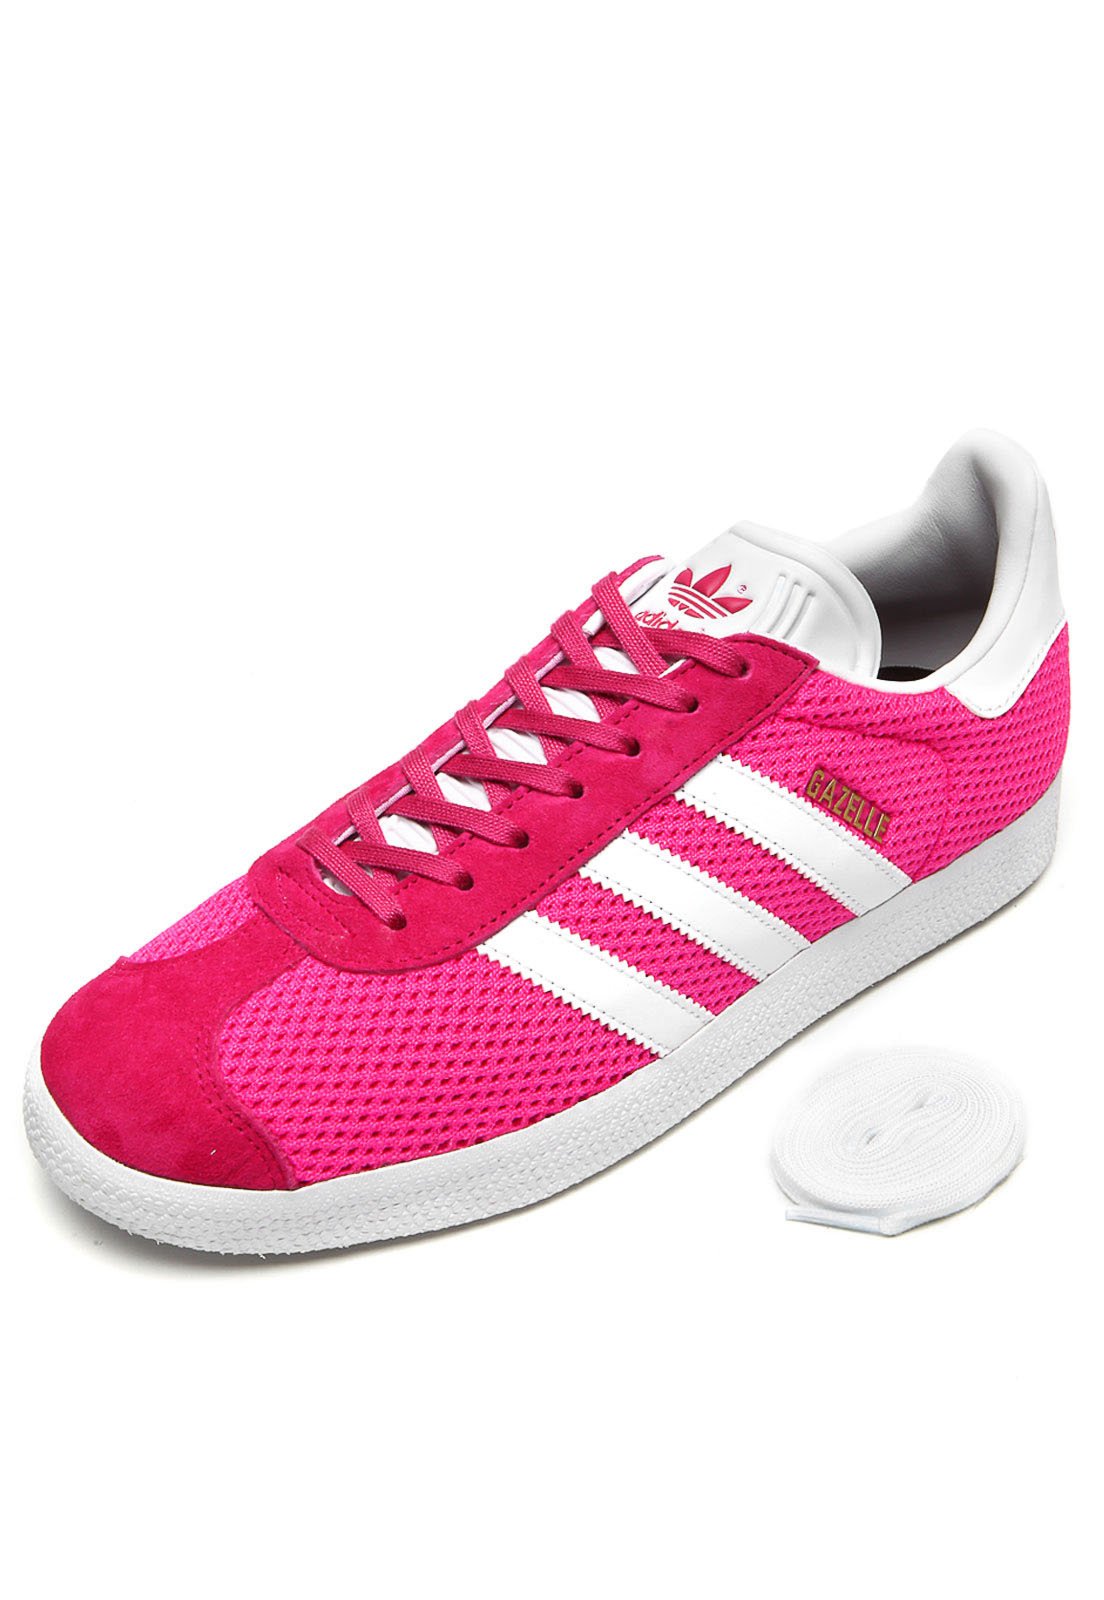 tenis adidas gazelle feminino rosa